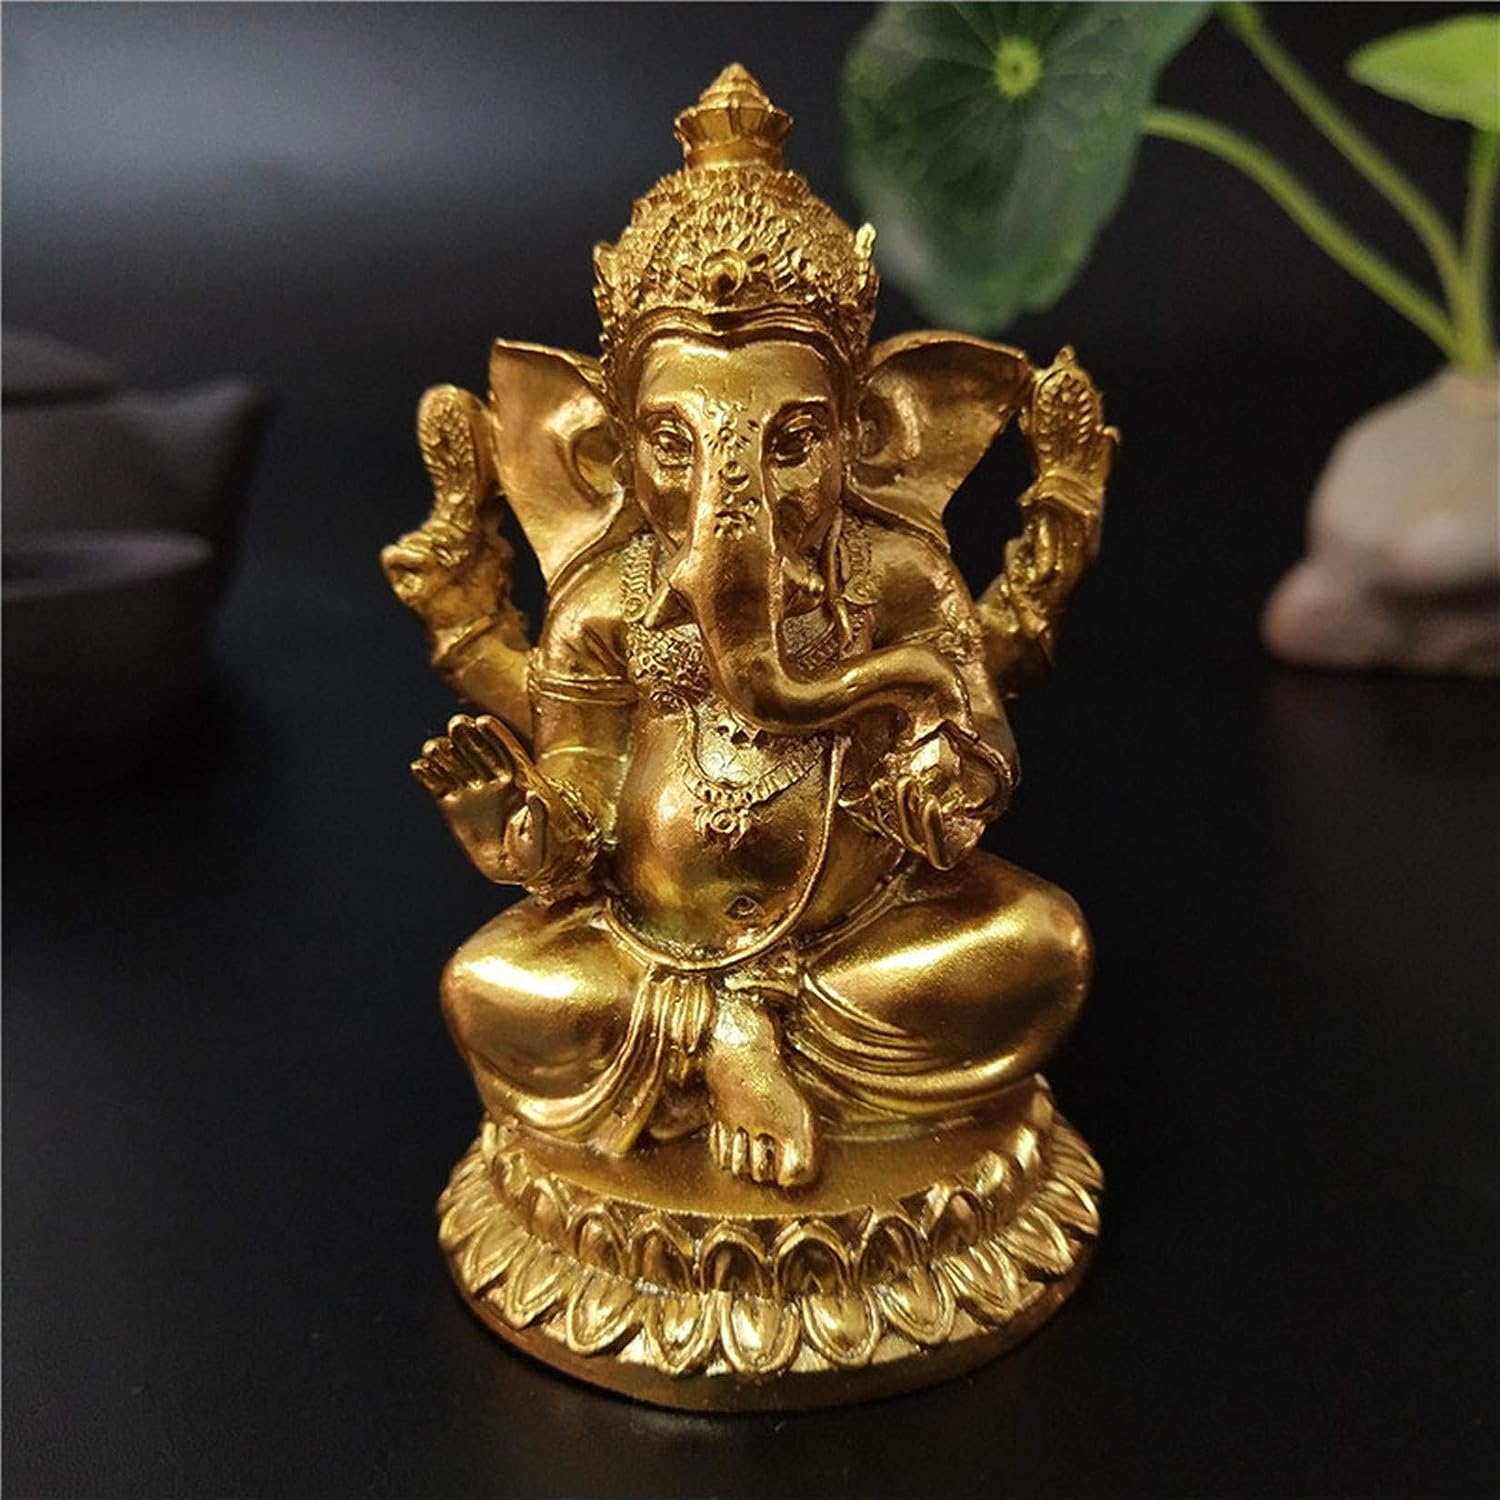 YODOOLTLY Gold Lord Ganesha Statues Review - Indian Hindu Gods